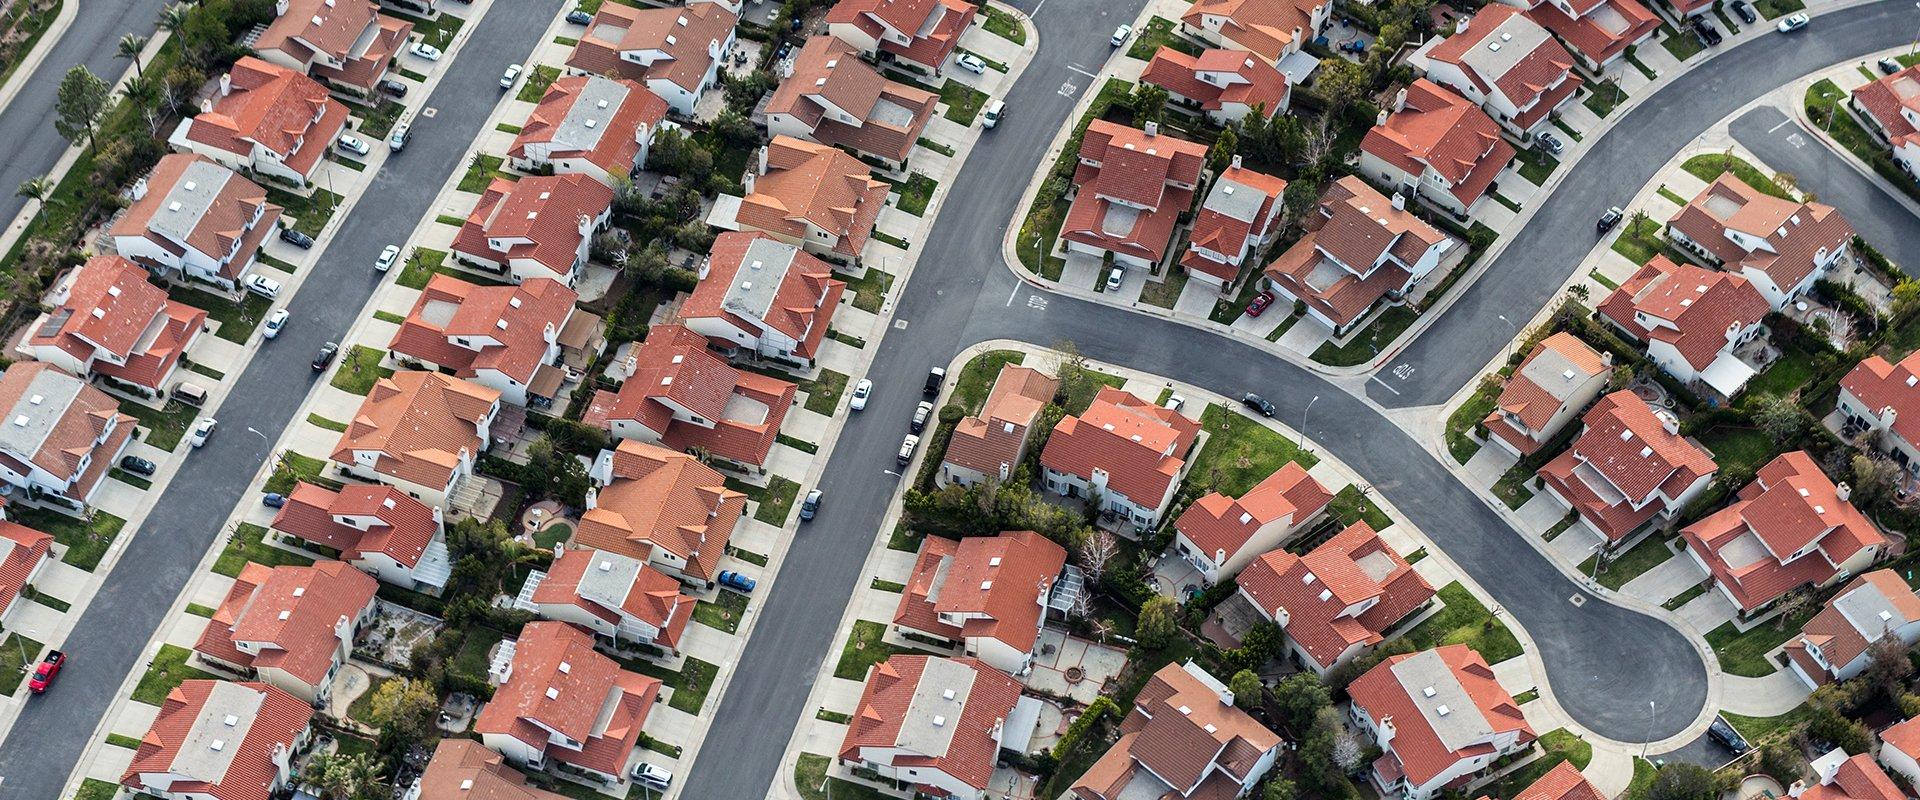 aerial view of a neighborhood in sacramento california